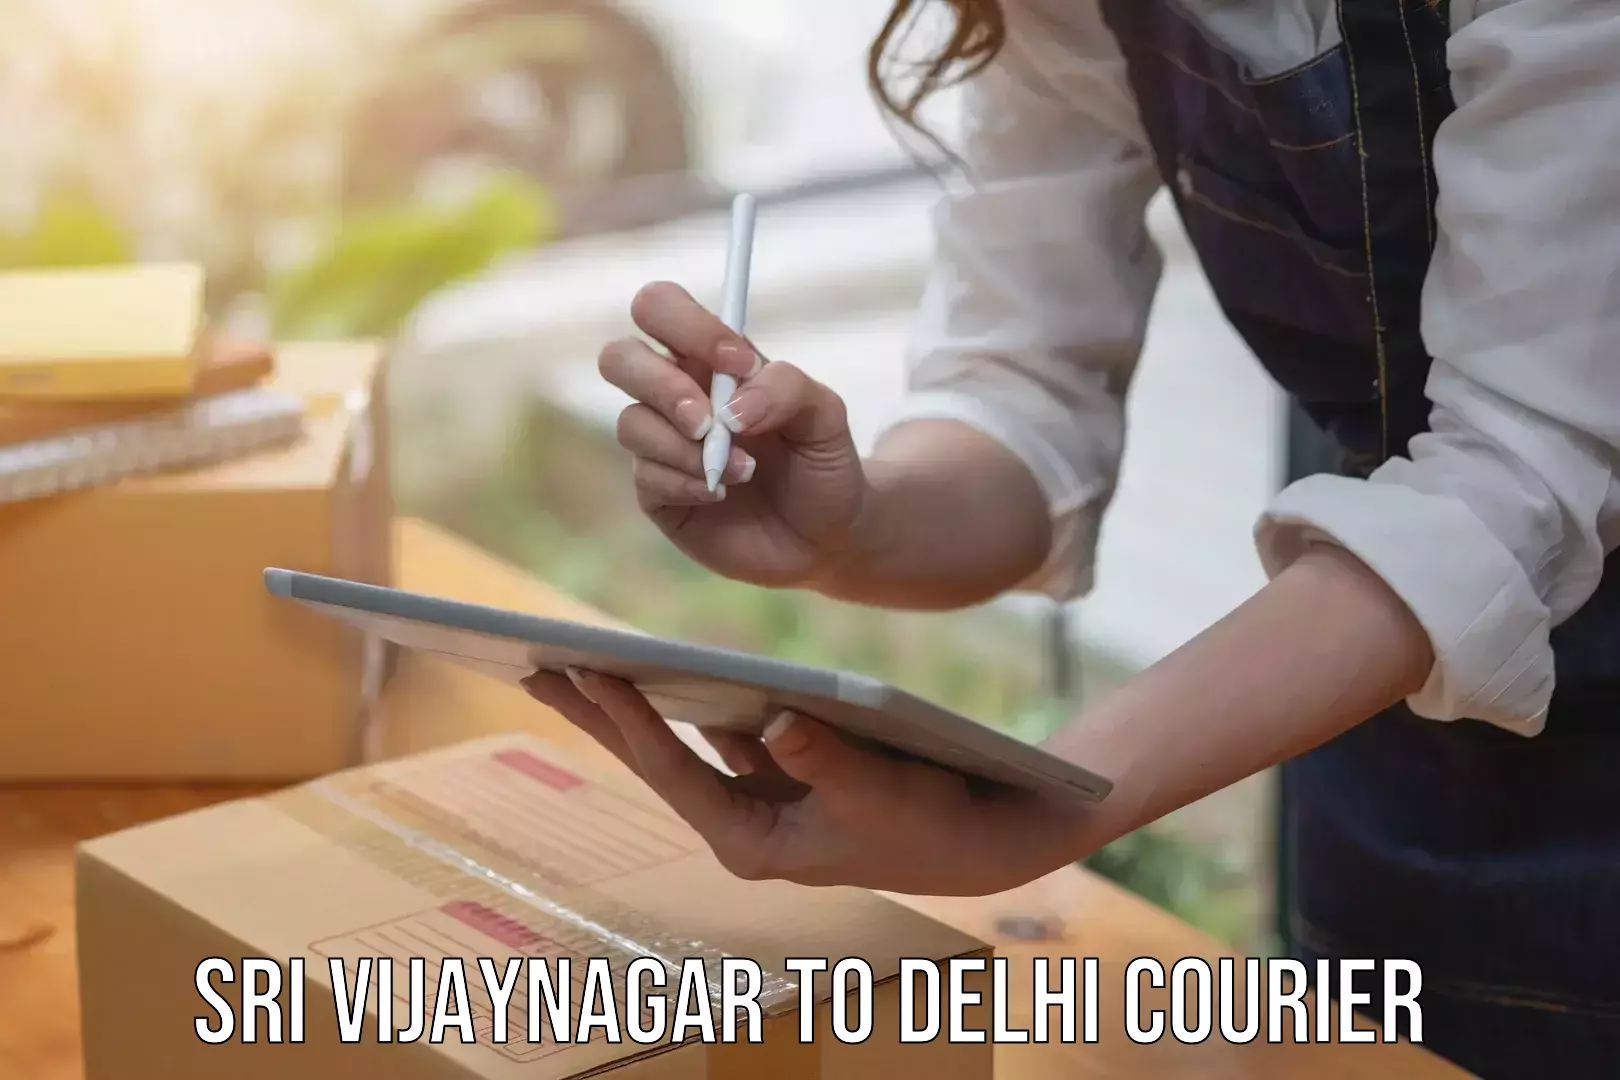 Budget-friendly shipping Sri Vijaynagar to NCR